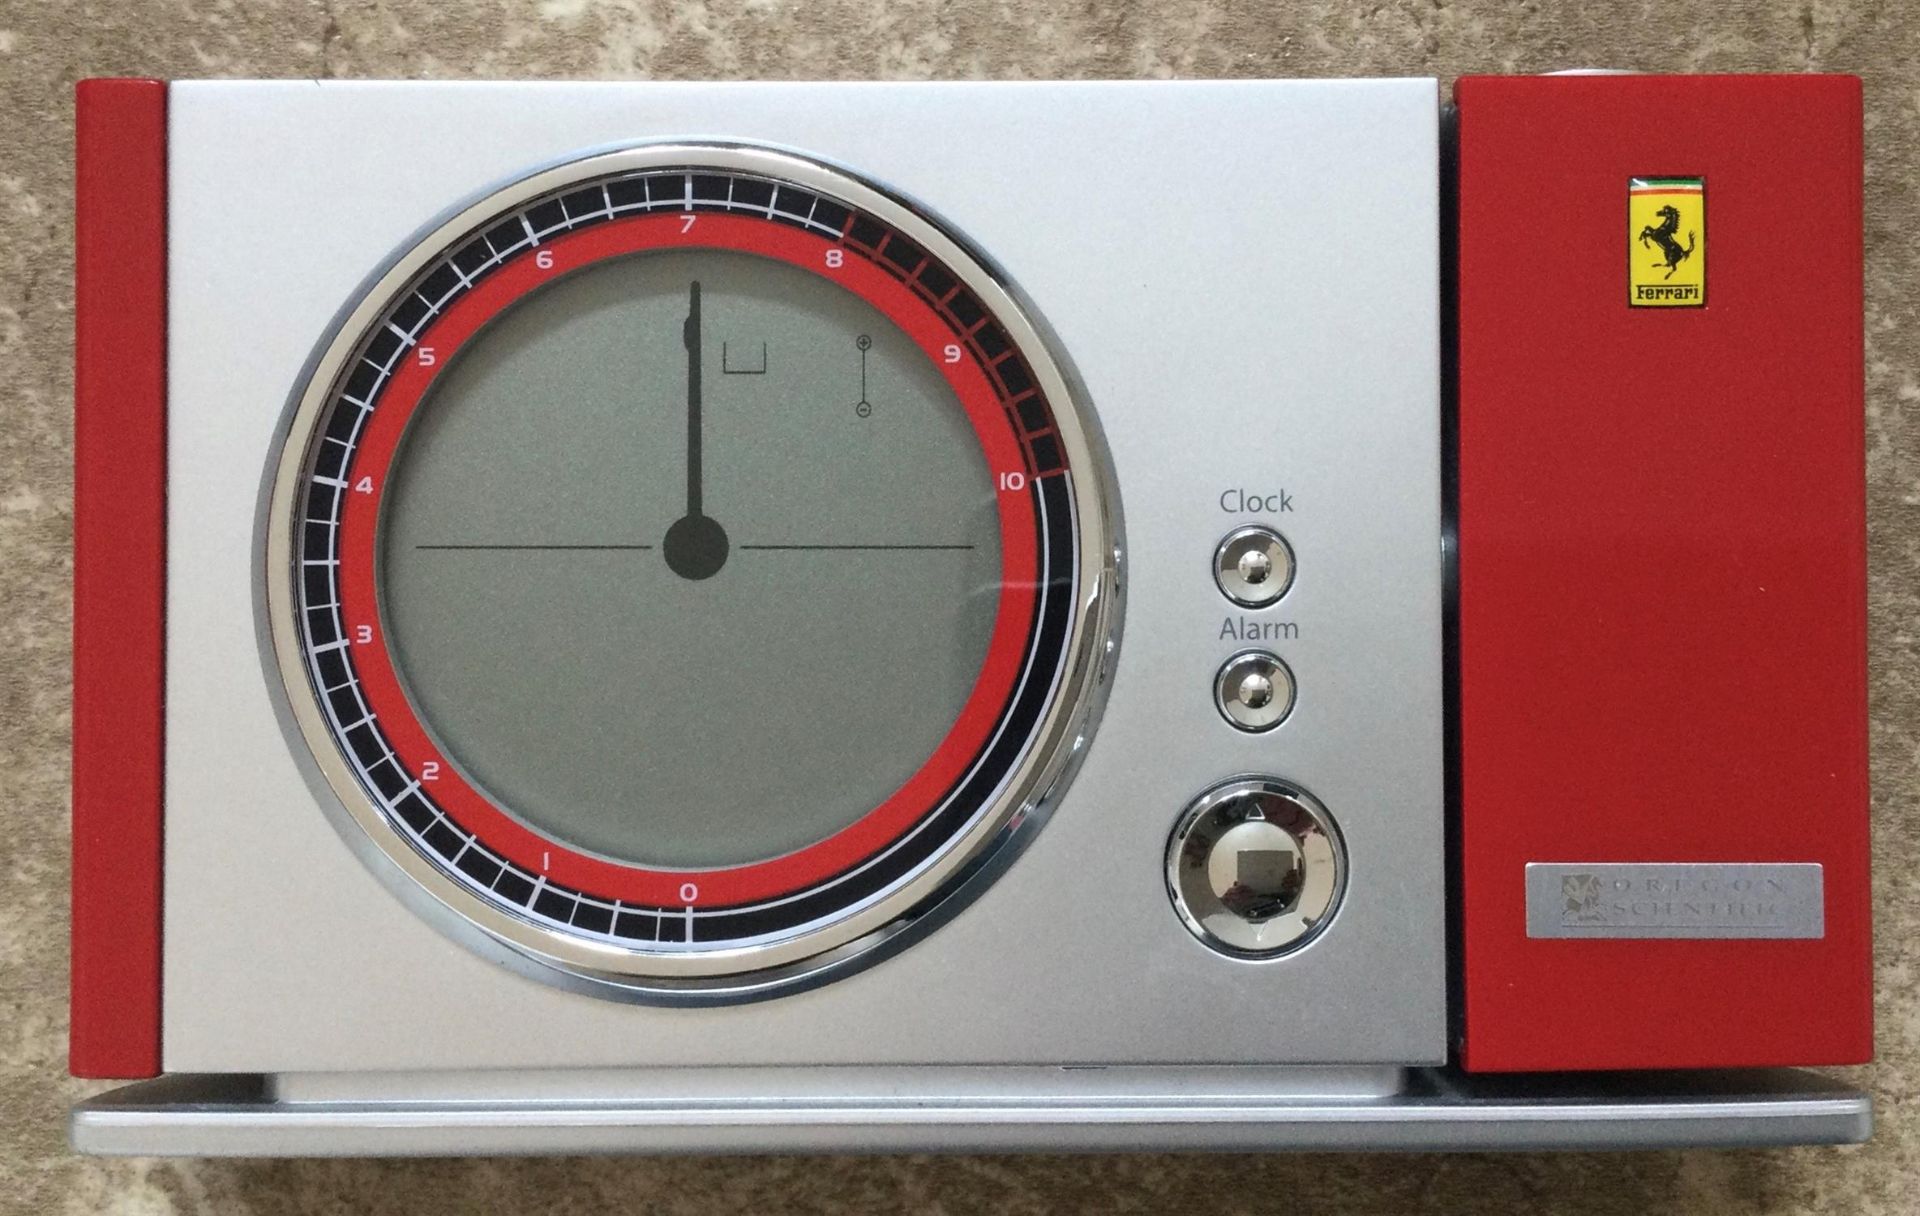 A Rare Maranello Ferrari-Badged Radio Controlled Projection Alarm Clock with Weather Forecast - Image 4 of 5